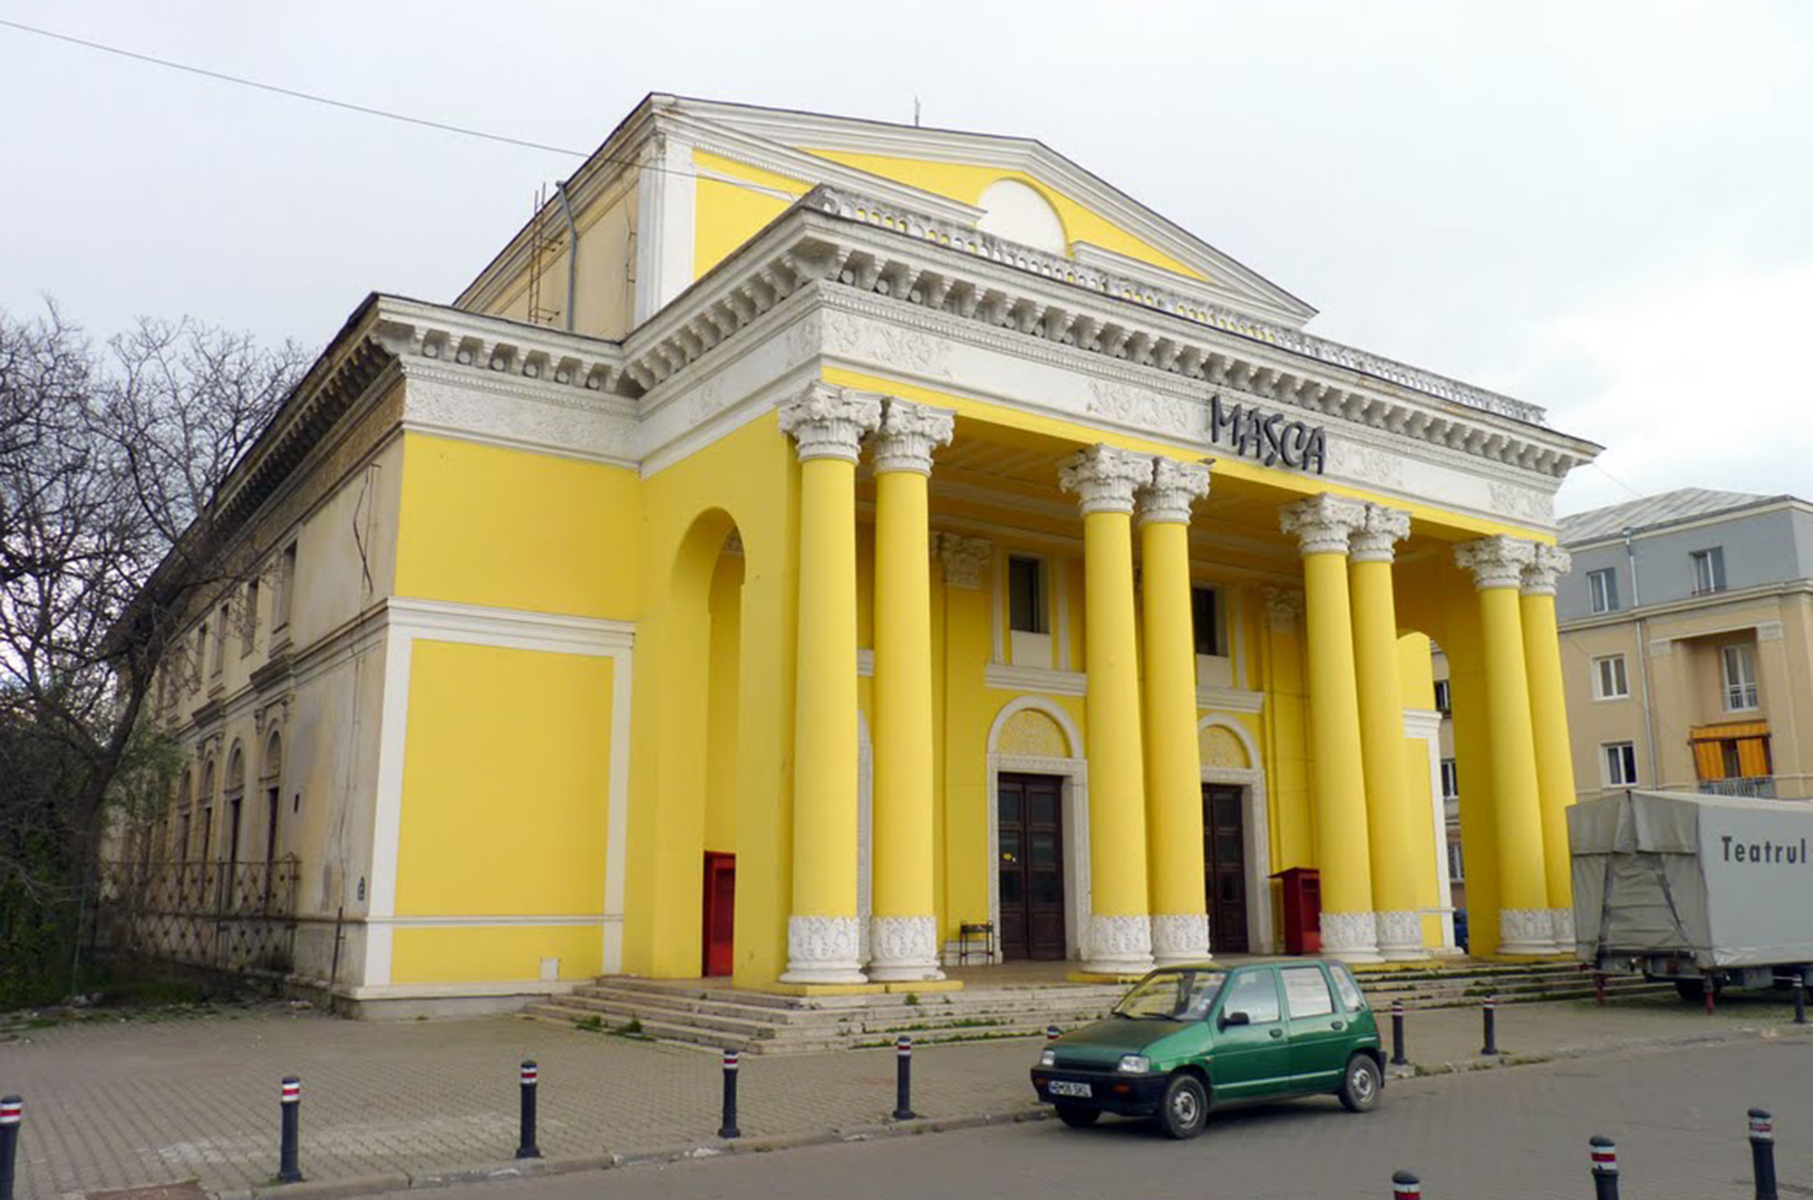 Teatrul Masca